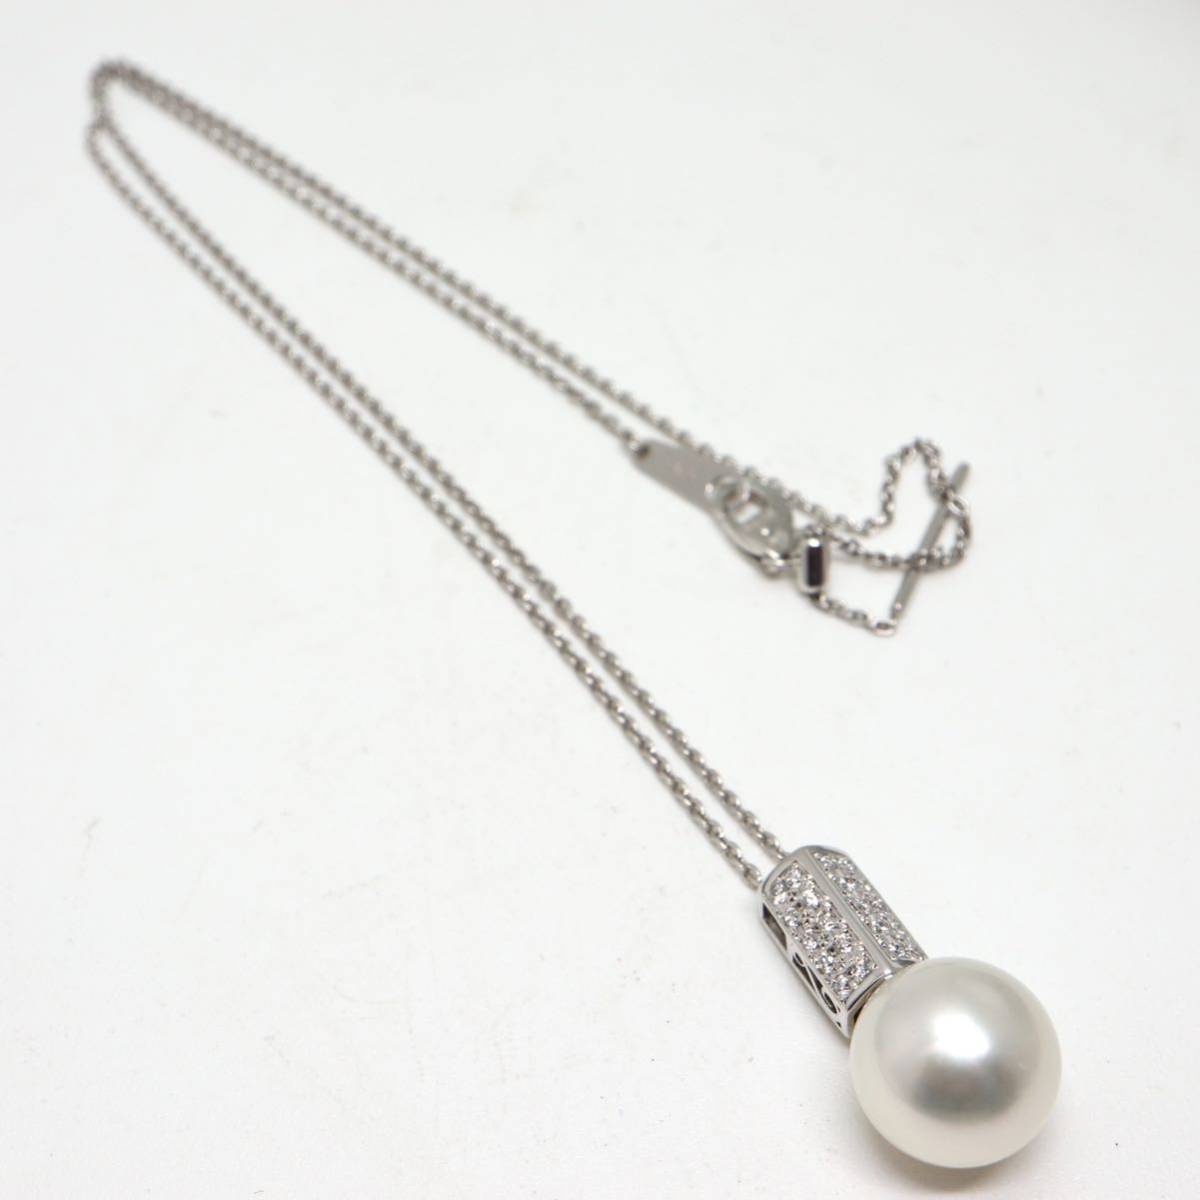 POLA jewelry(ポーラジュエリー)《K18WG天然ダイヤモンド付南洋白蝶真珠ネックレス》N 7.5g 45cm 11.5mm珠 pearl necklace jewelry ED9/EE7_画像7